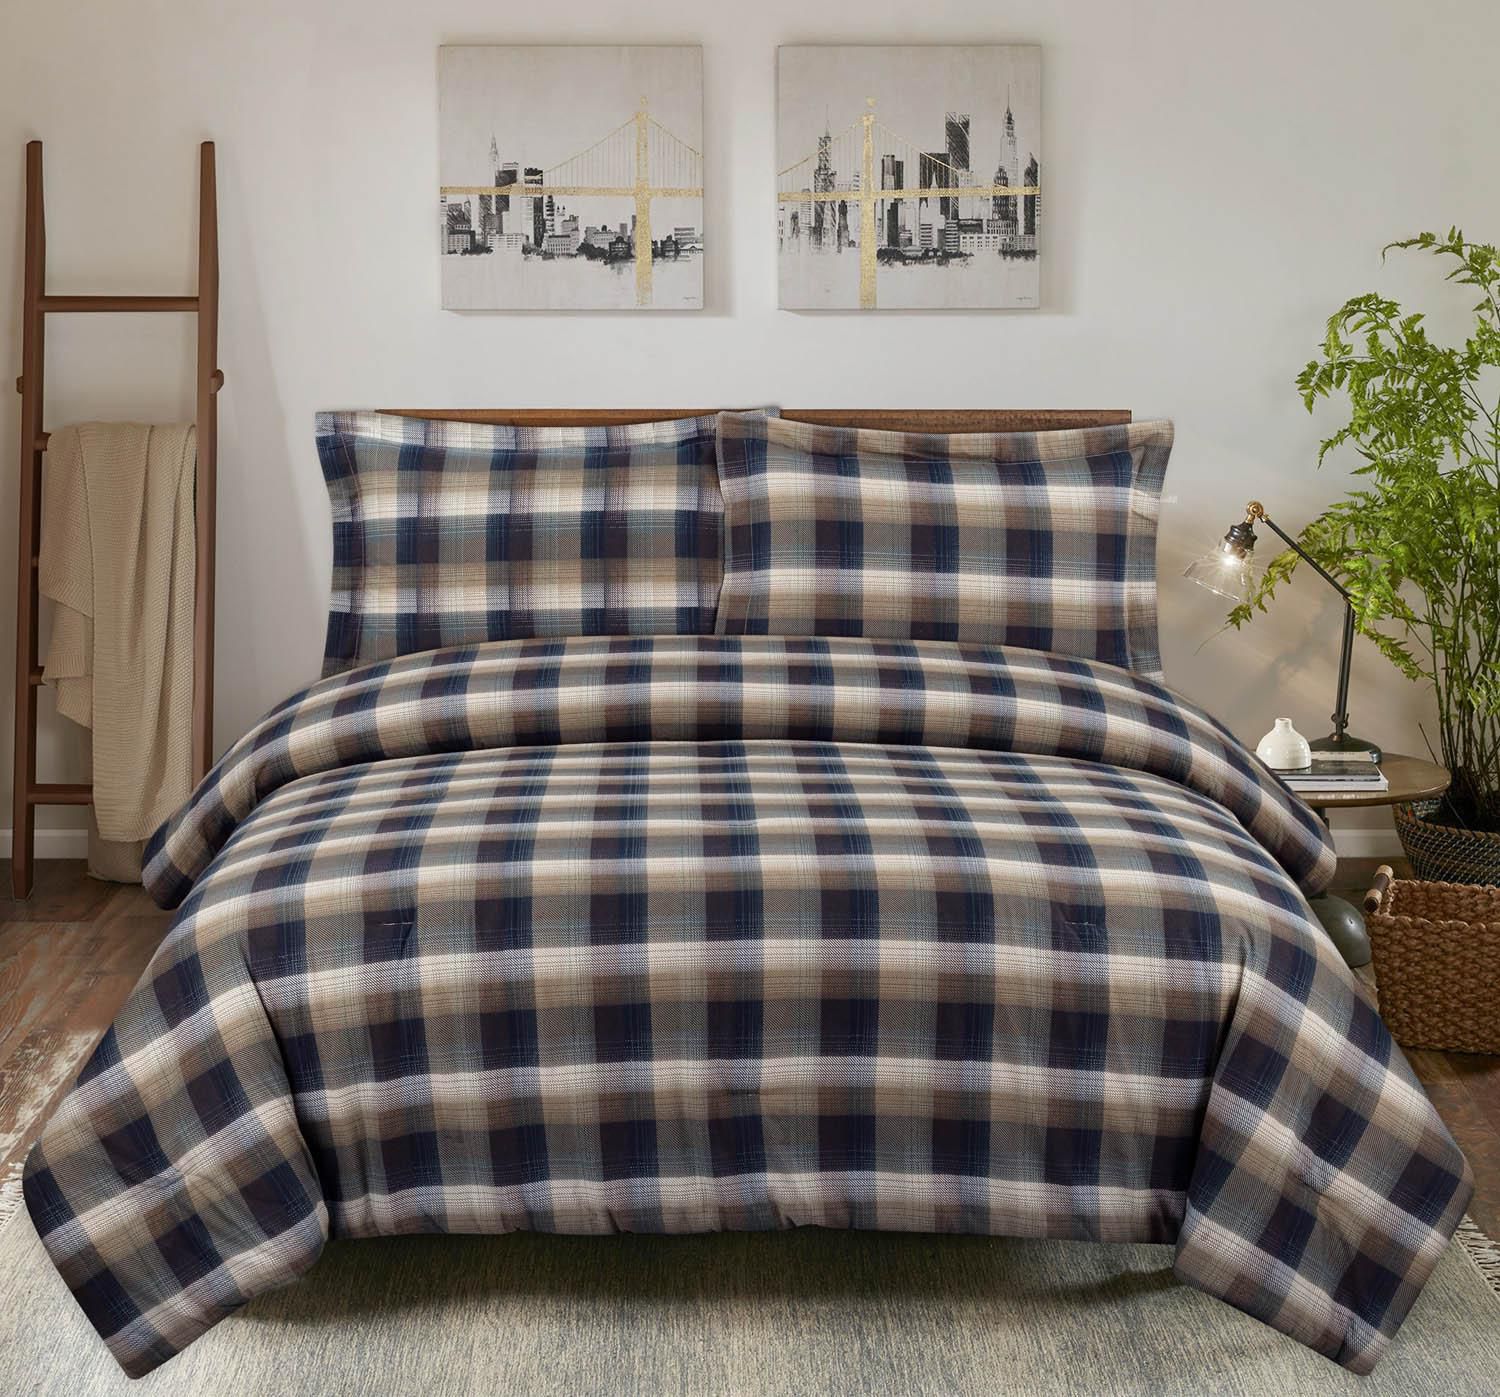 Flannel Navy Plaid King Comforter Set, Plaid Flannel Duvet Cover